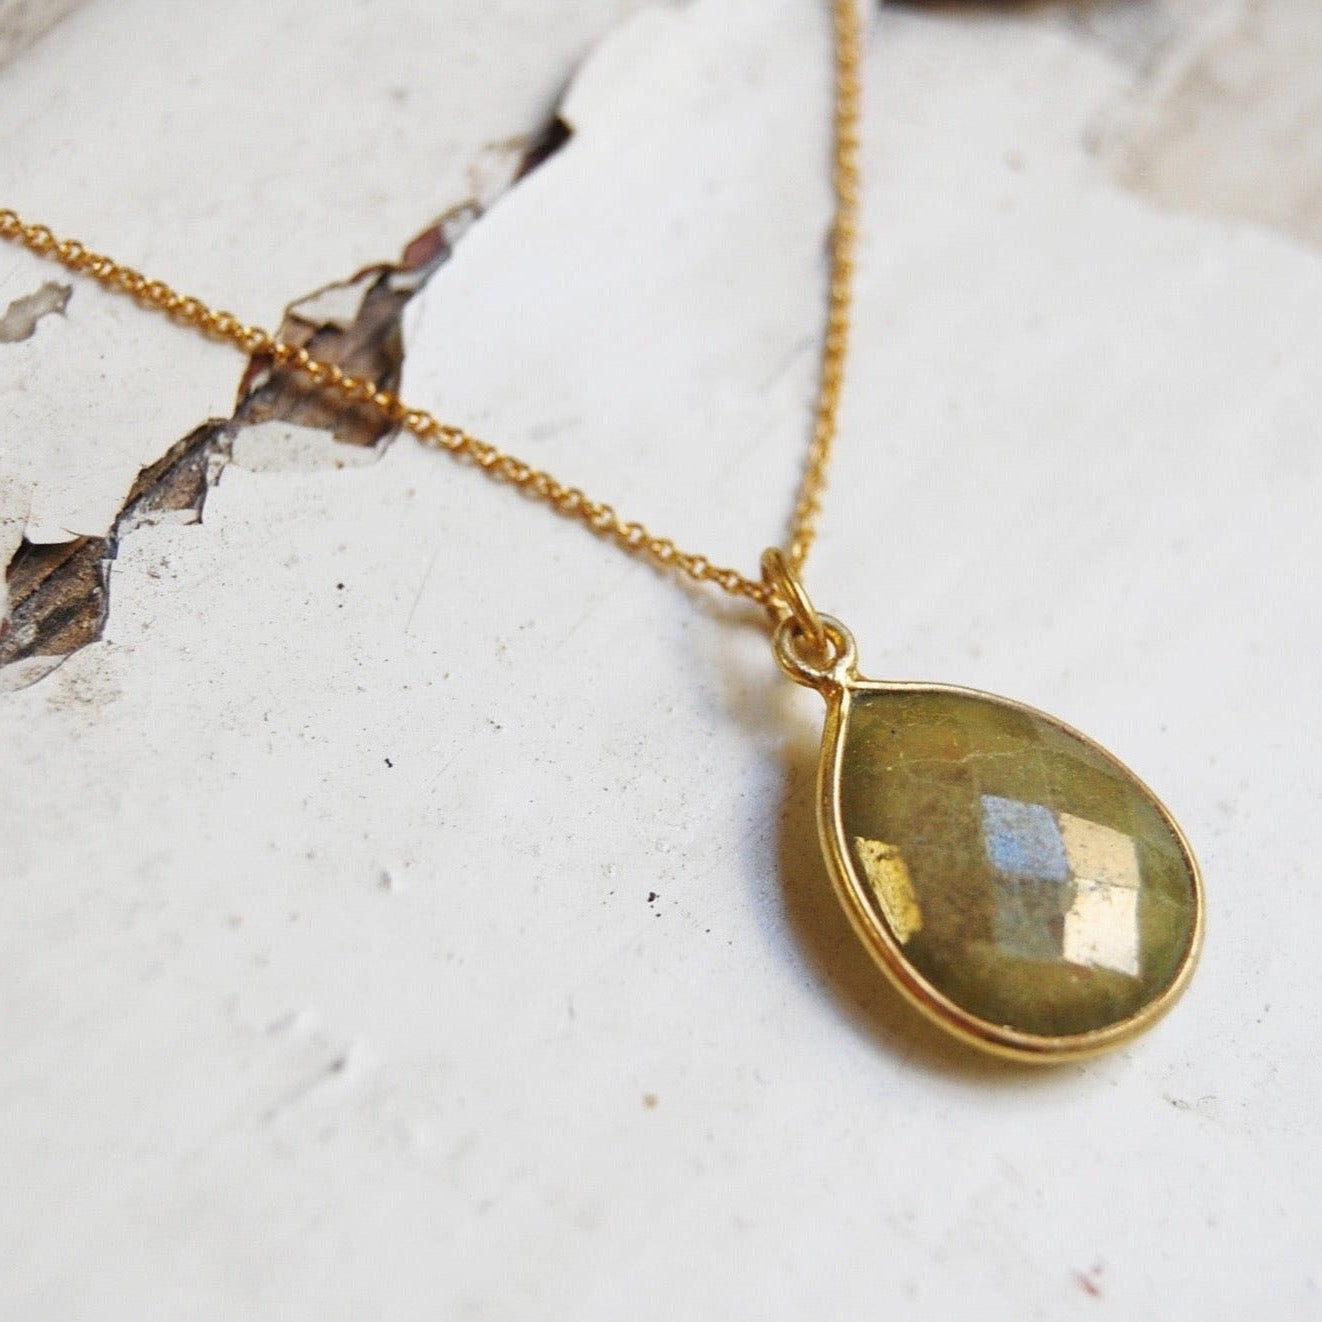 labradorite | stone pendant necklace | 24k gold-plated